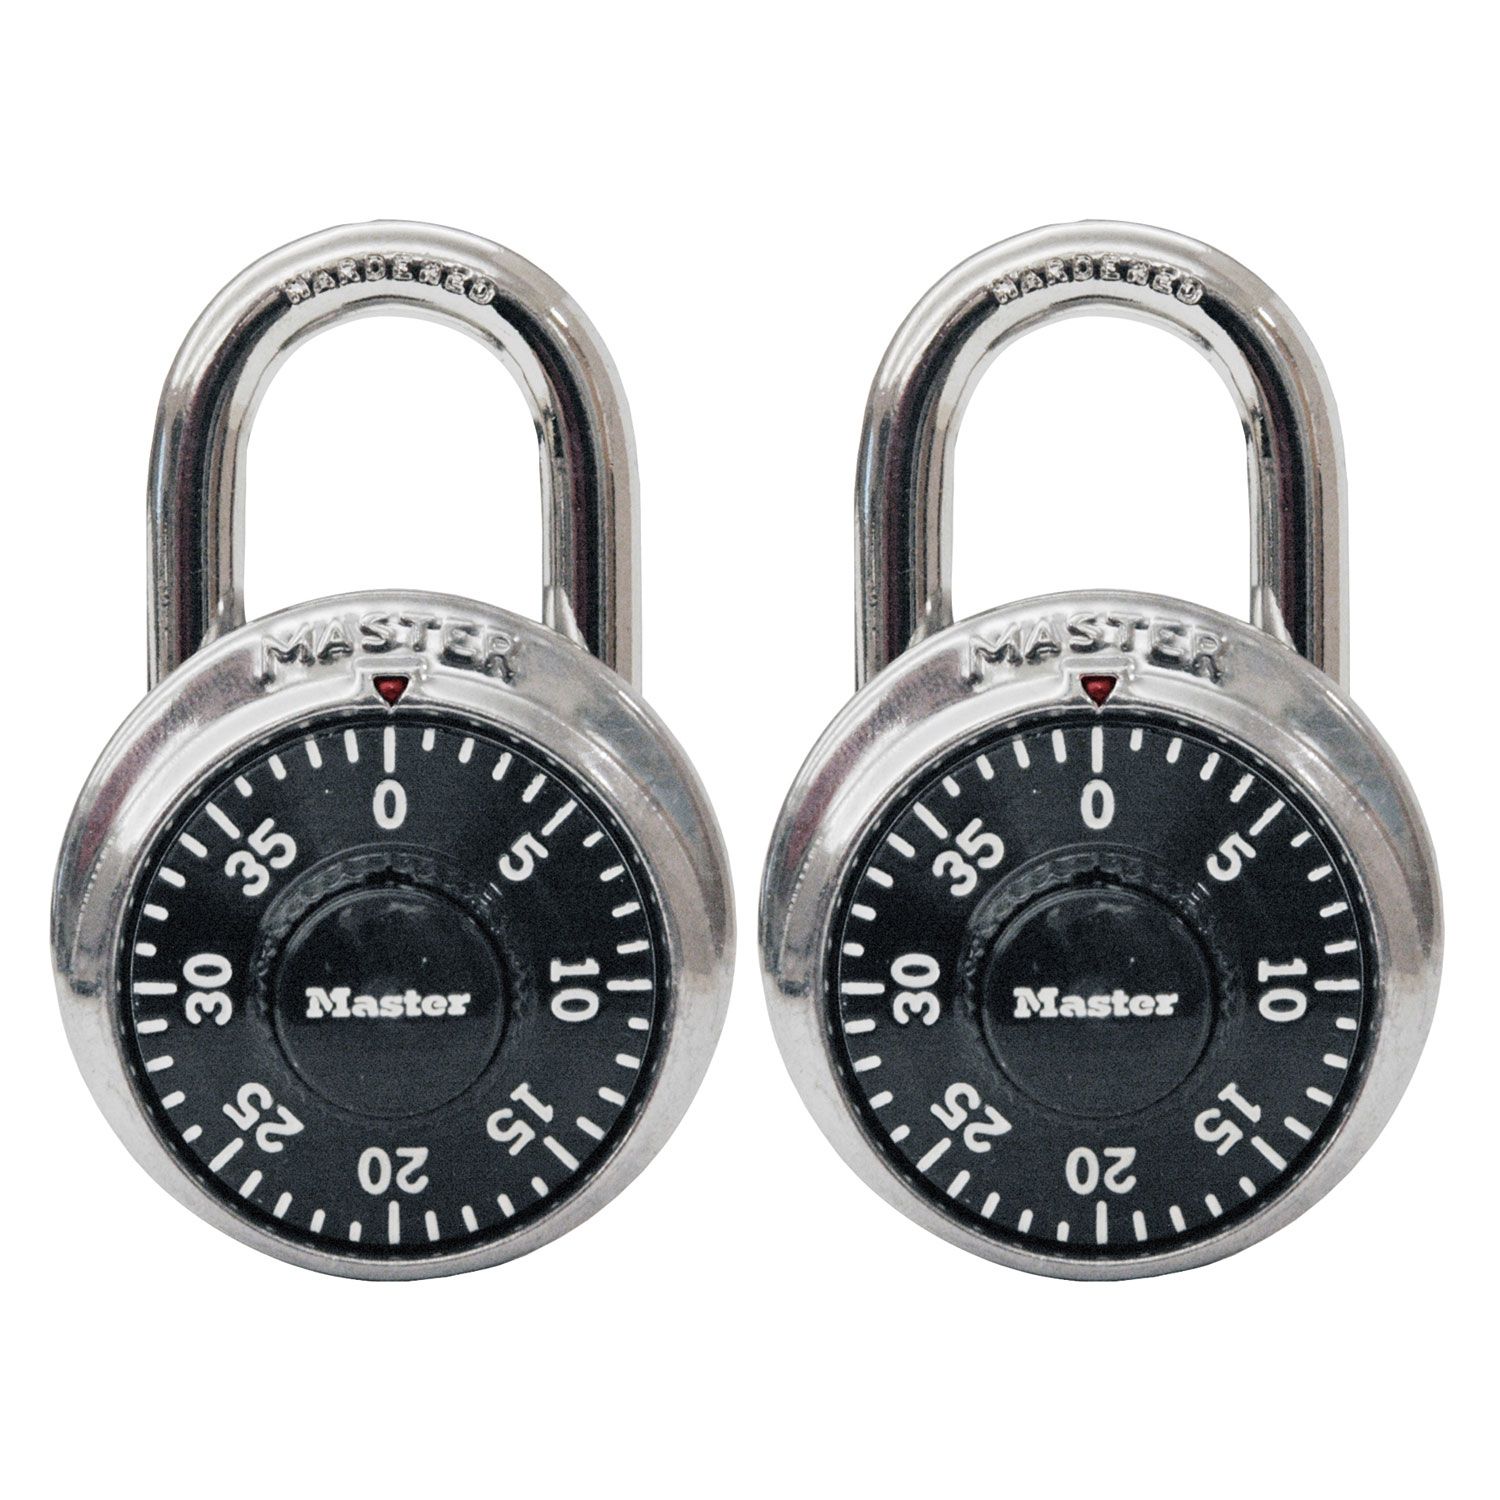 Padlock Combo 3 Dials One Each Master Lock Combination Padlocks 1561dast for sale online 